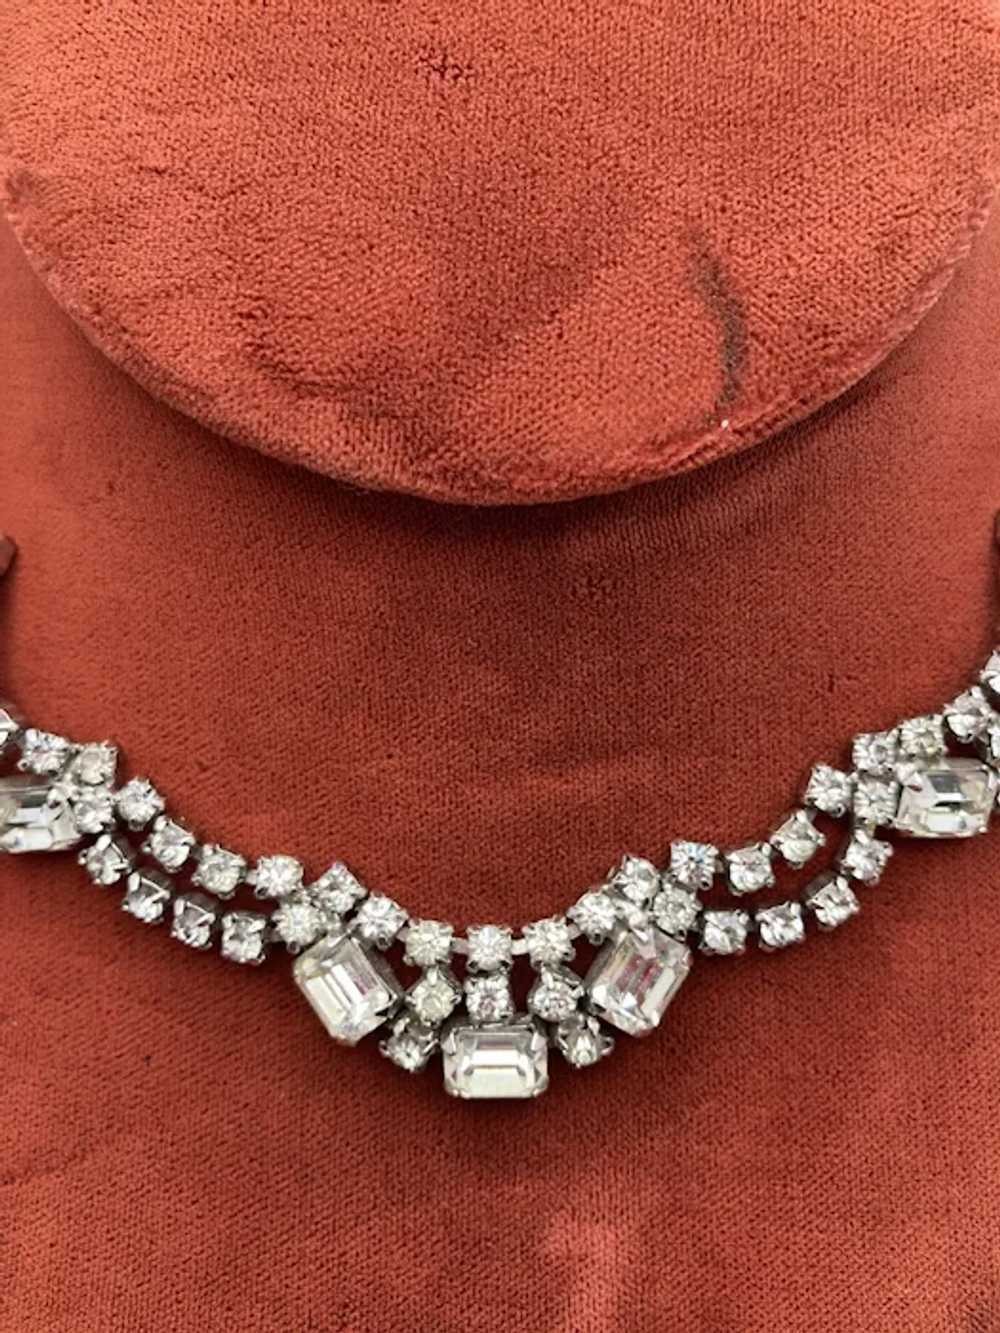 Vintage Mid-Century Rhinestone Choker Necklace - image 5